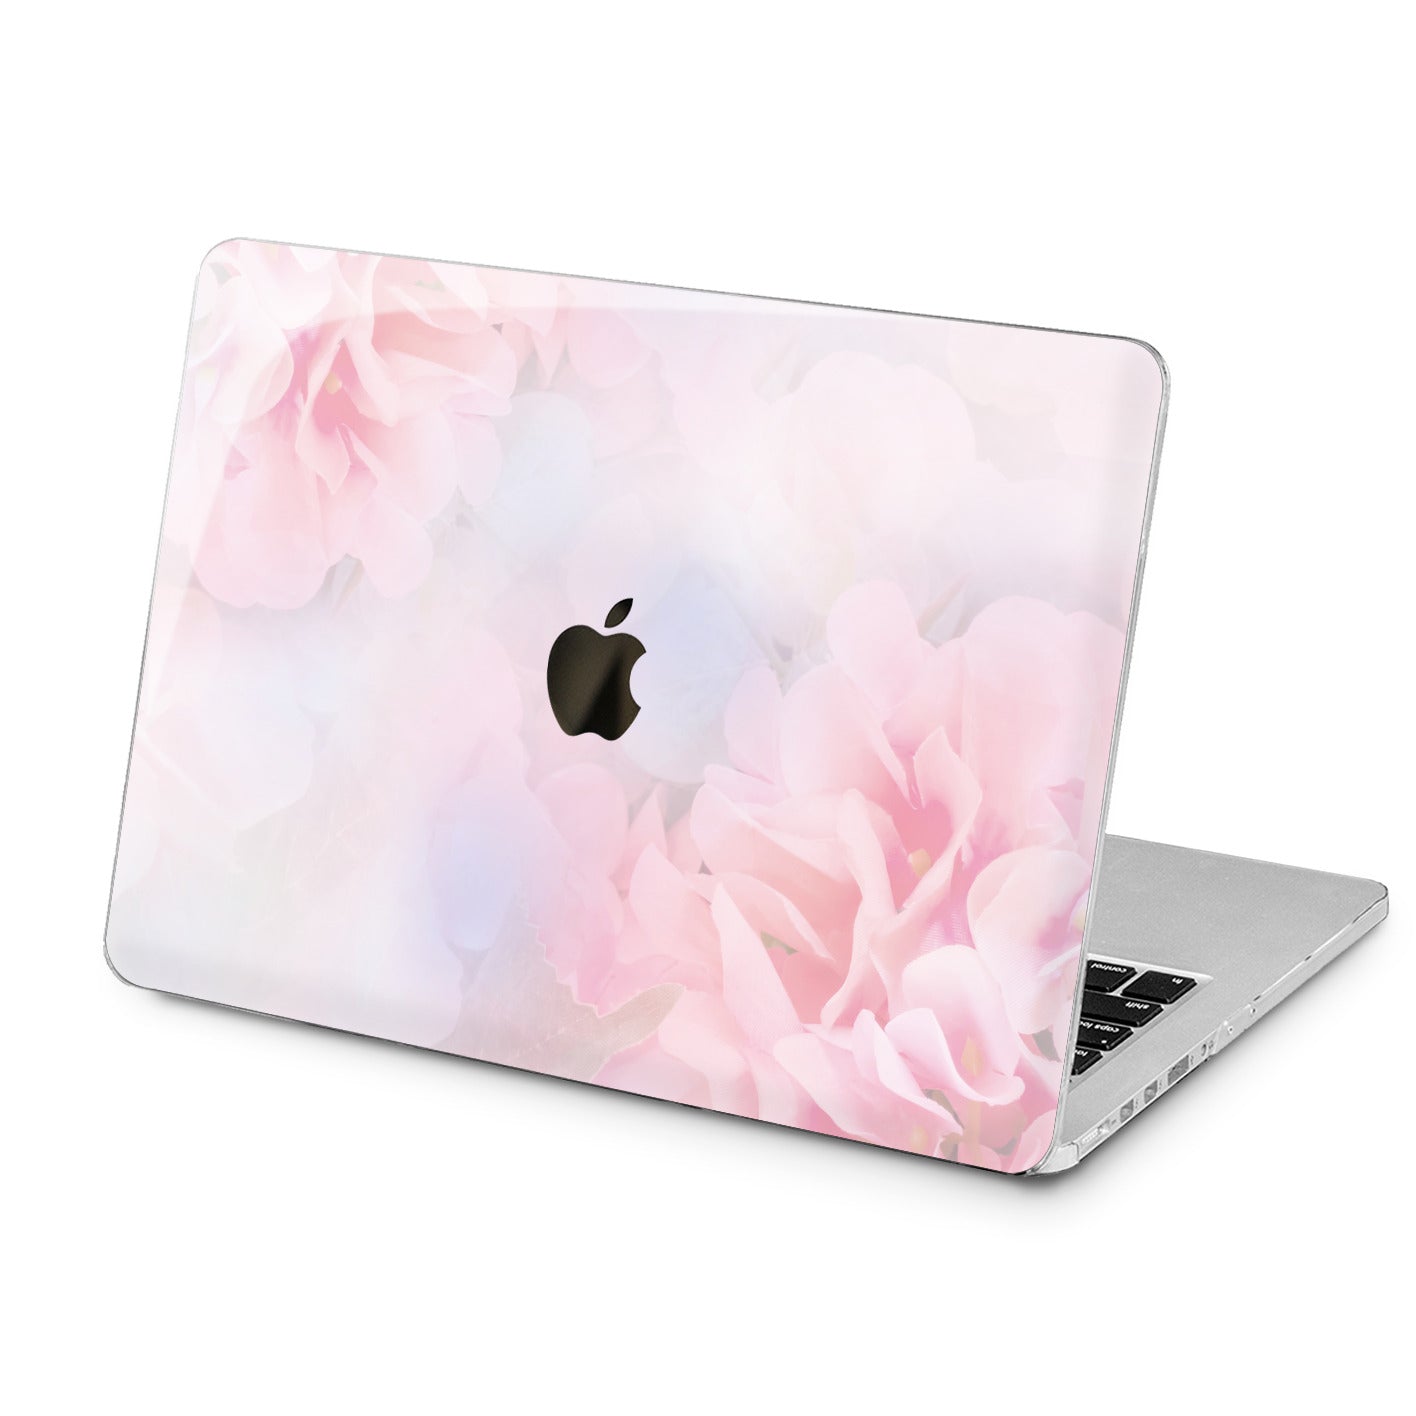 Lex Altern Lex Altern Gentle Floral Theme Case for your Laptop Apple Macbook.